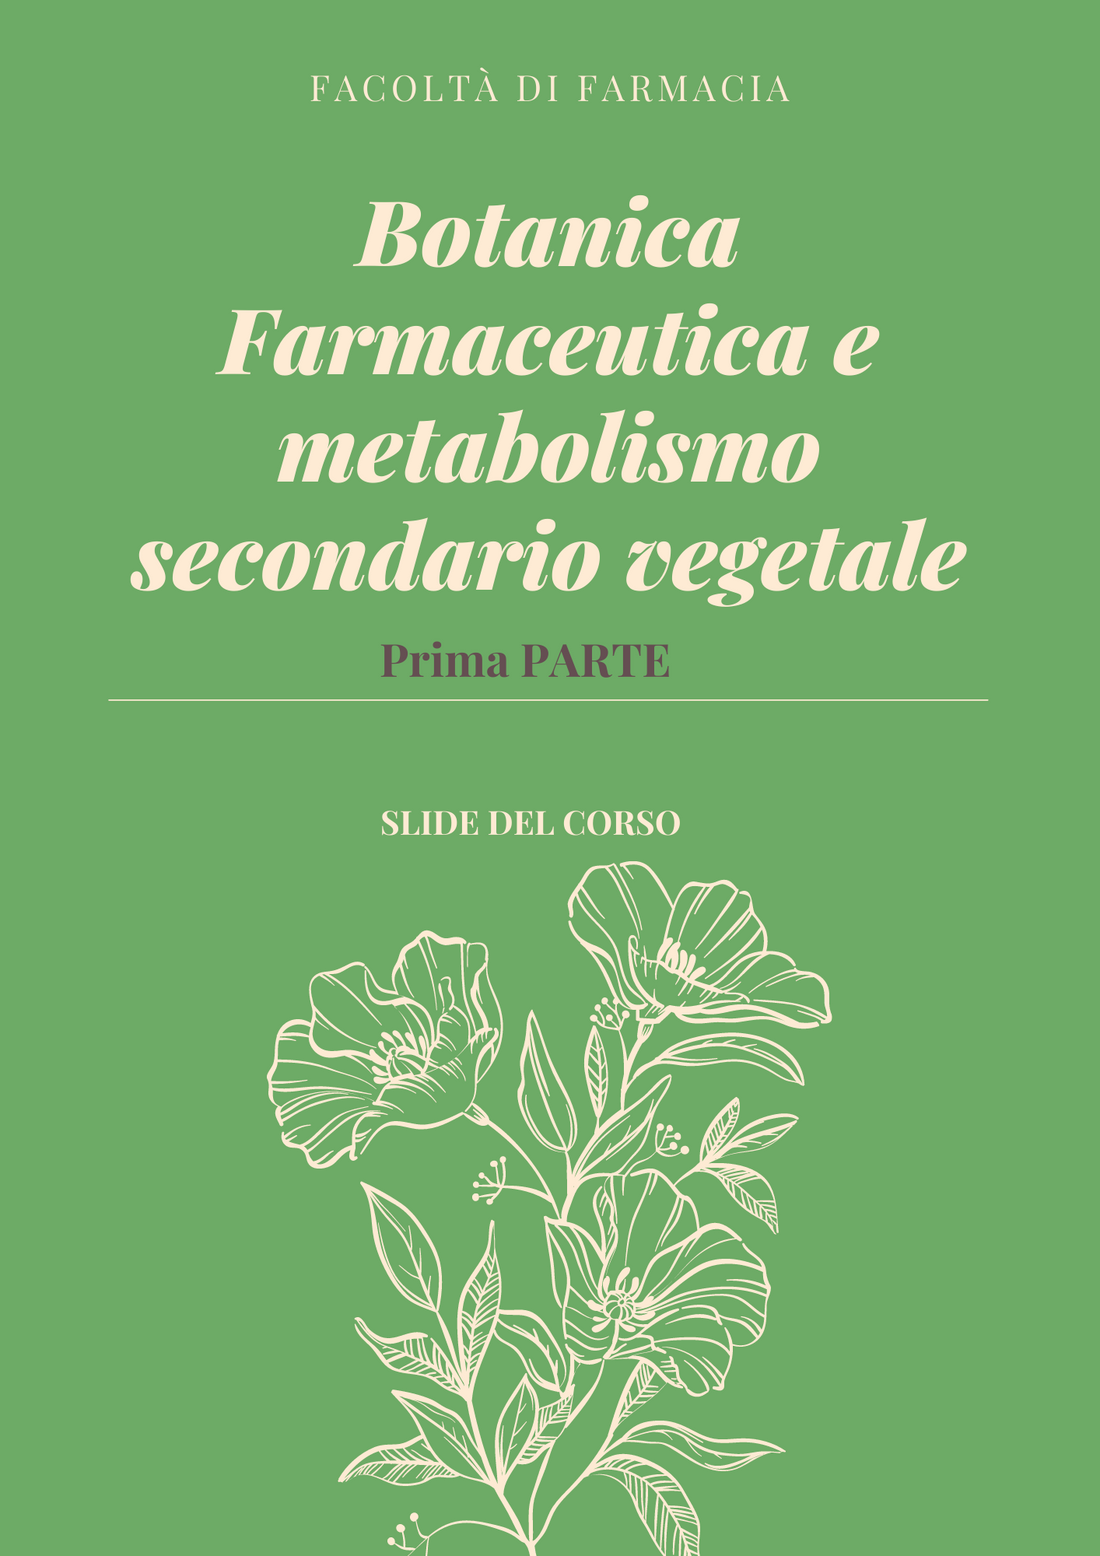 Botanica farmaceutica e metabolismo secondario vegetale (1°Parte) - Slide